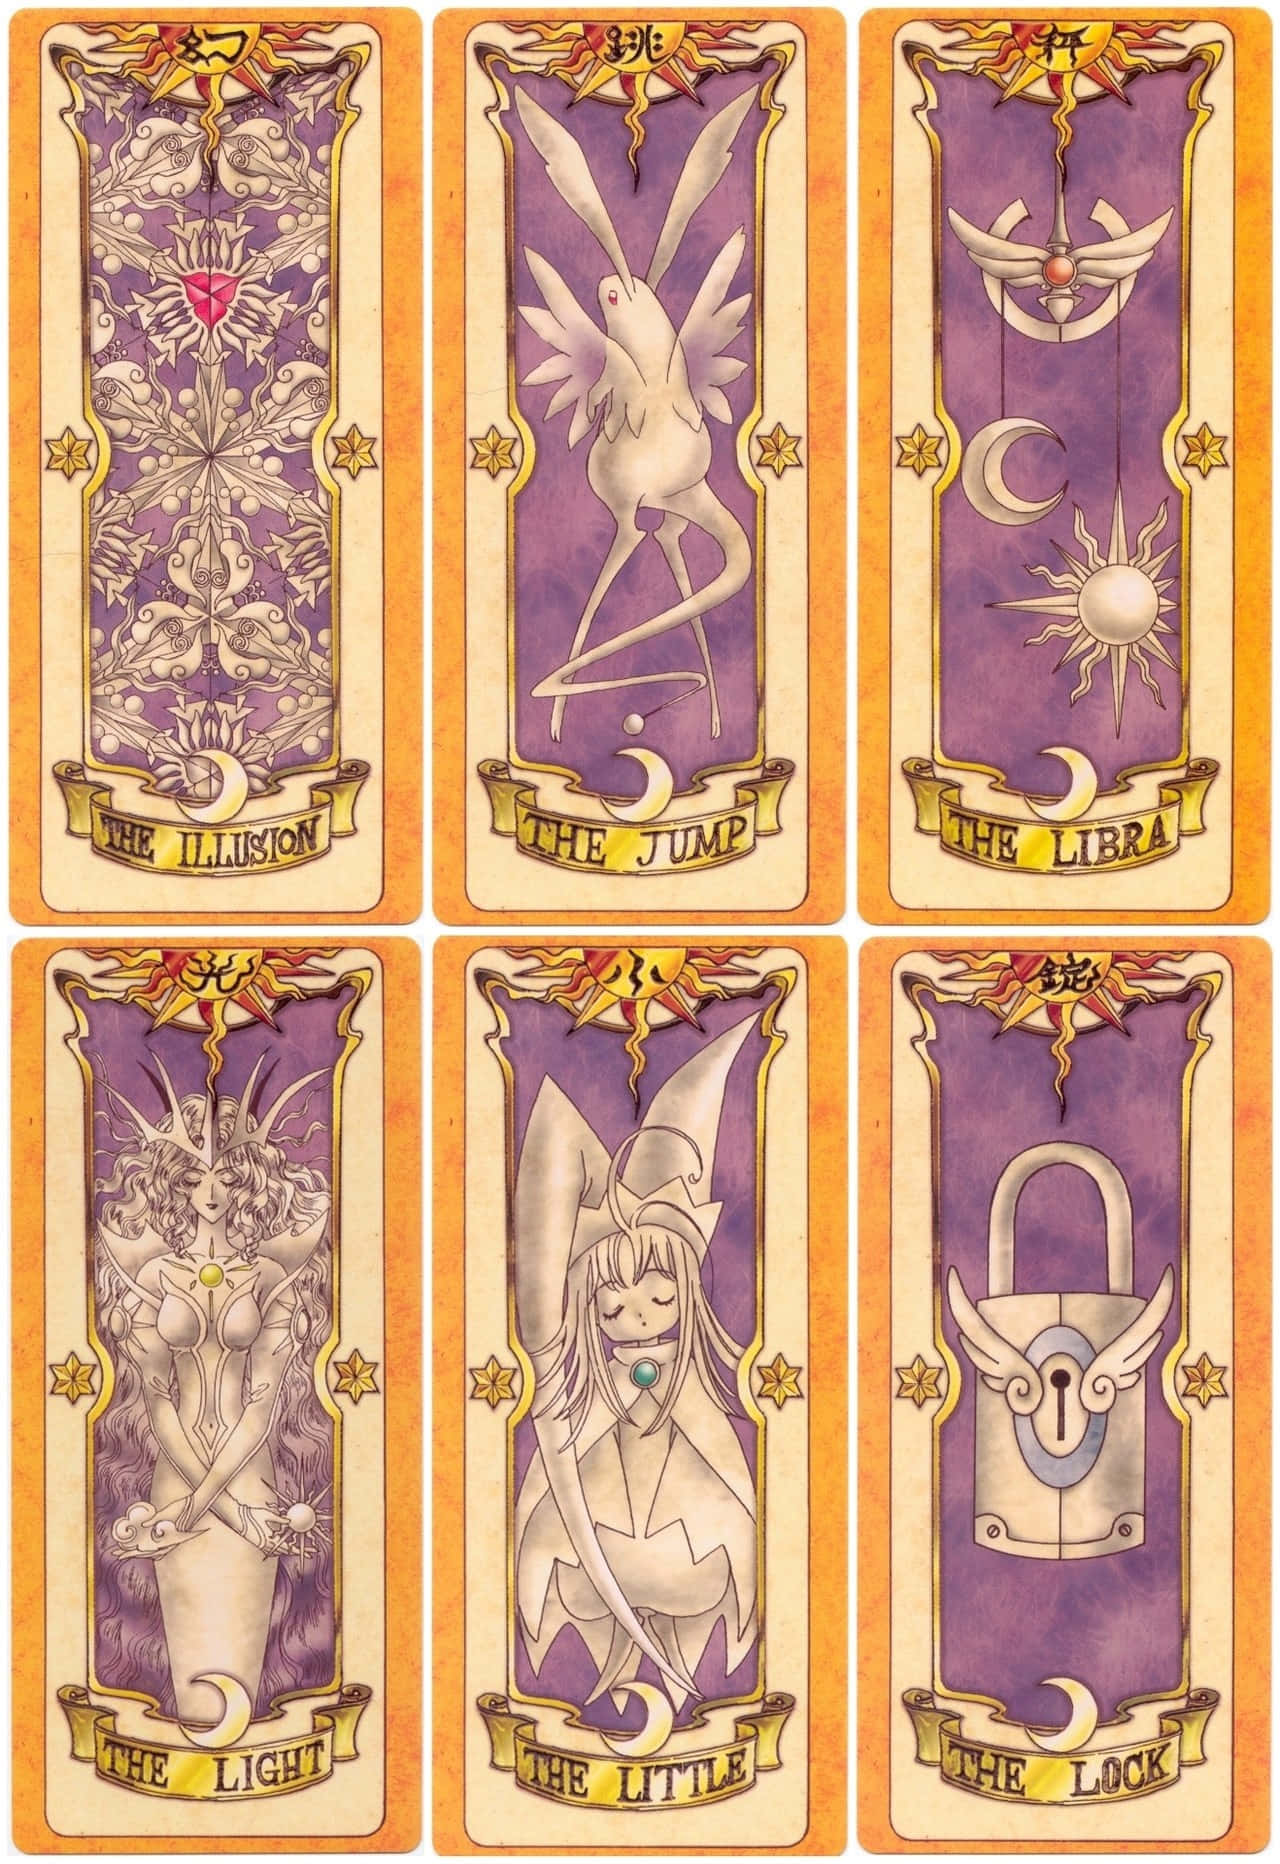 Magical Sakura Cards From The Anime Series "cardcaptor" Wallpaper